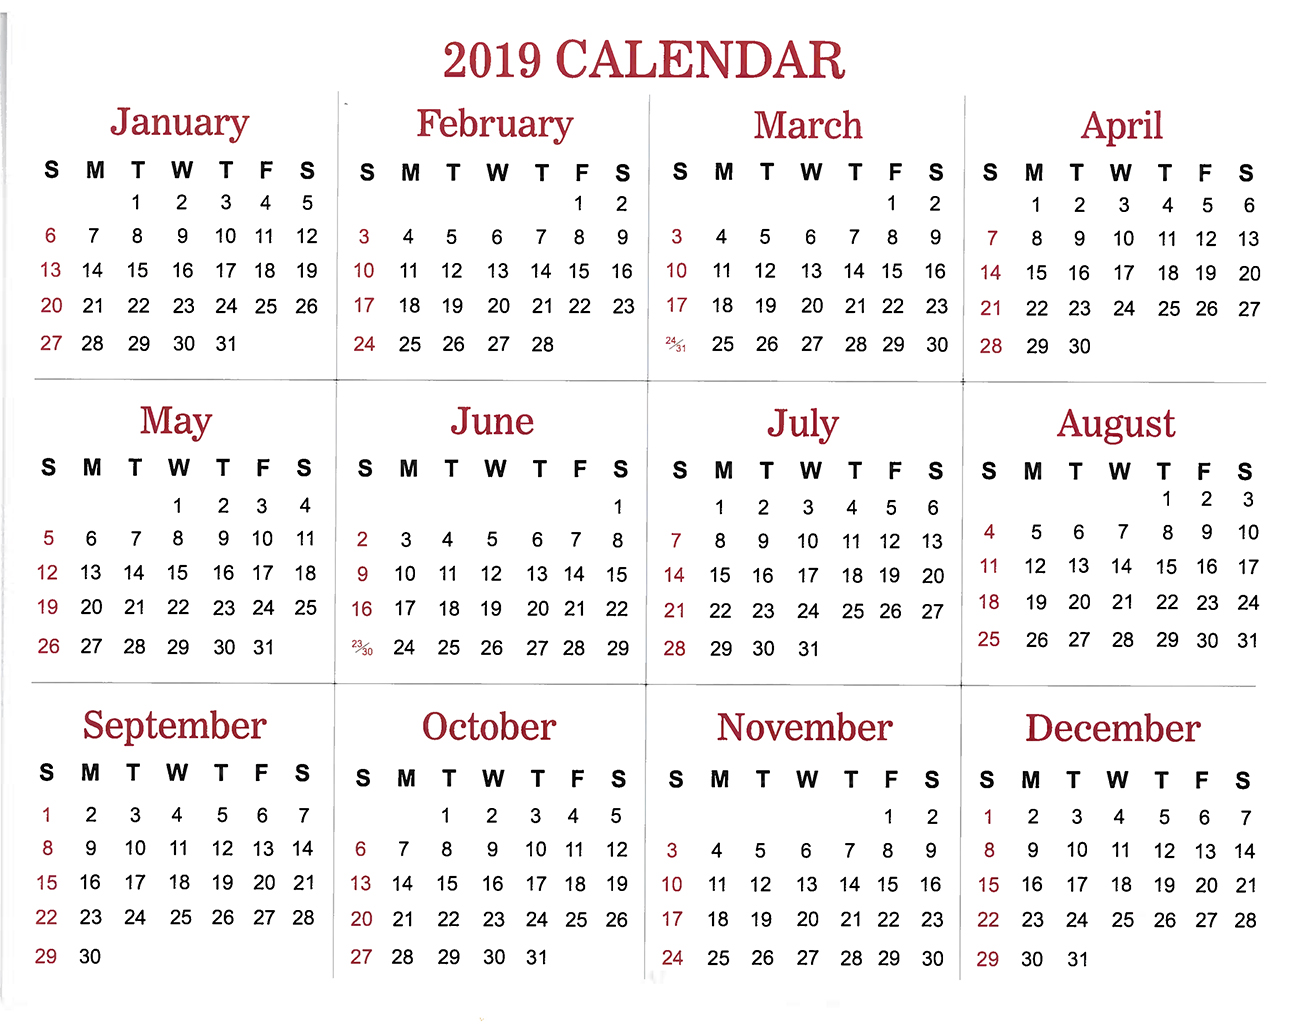 Back Cover: 2018 The Peoples Gospel Hour Calendar